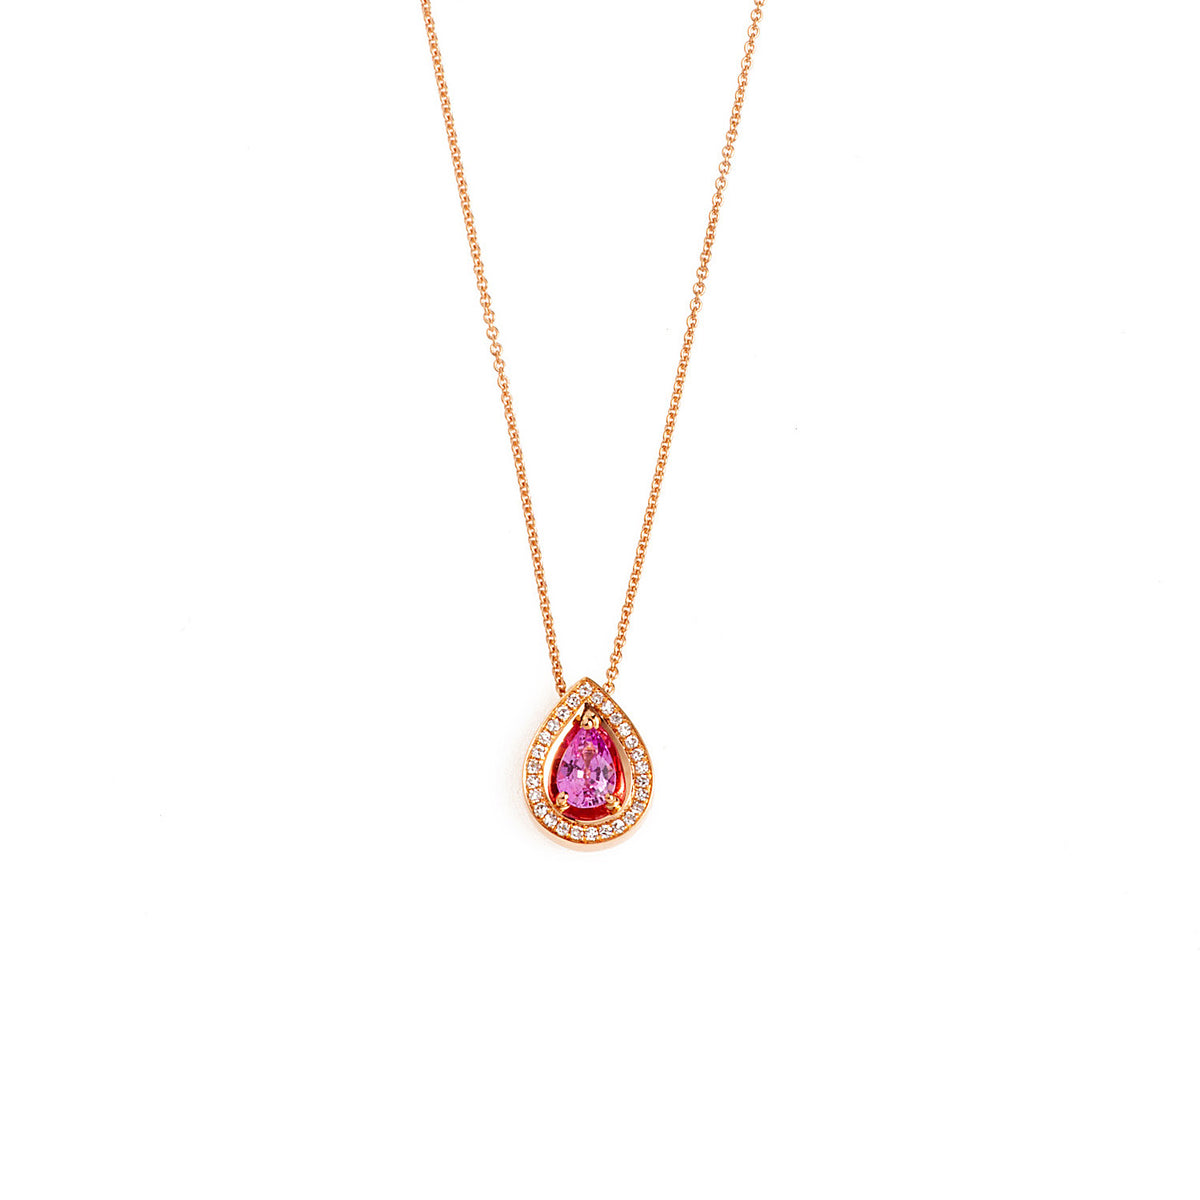 Pink sapphire and diamond necklace. Κολιέ με μπριγιάν και ζαφείρι.